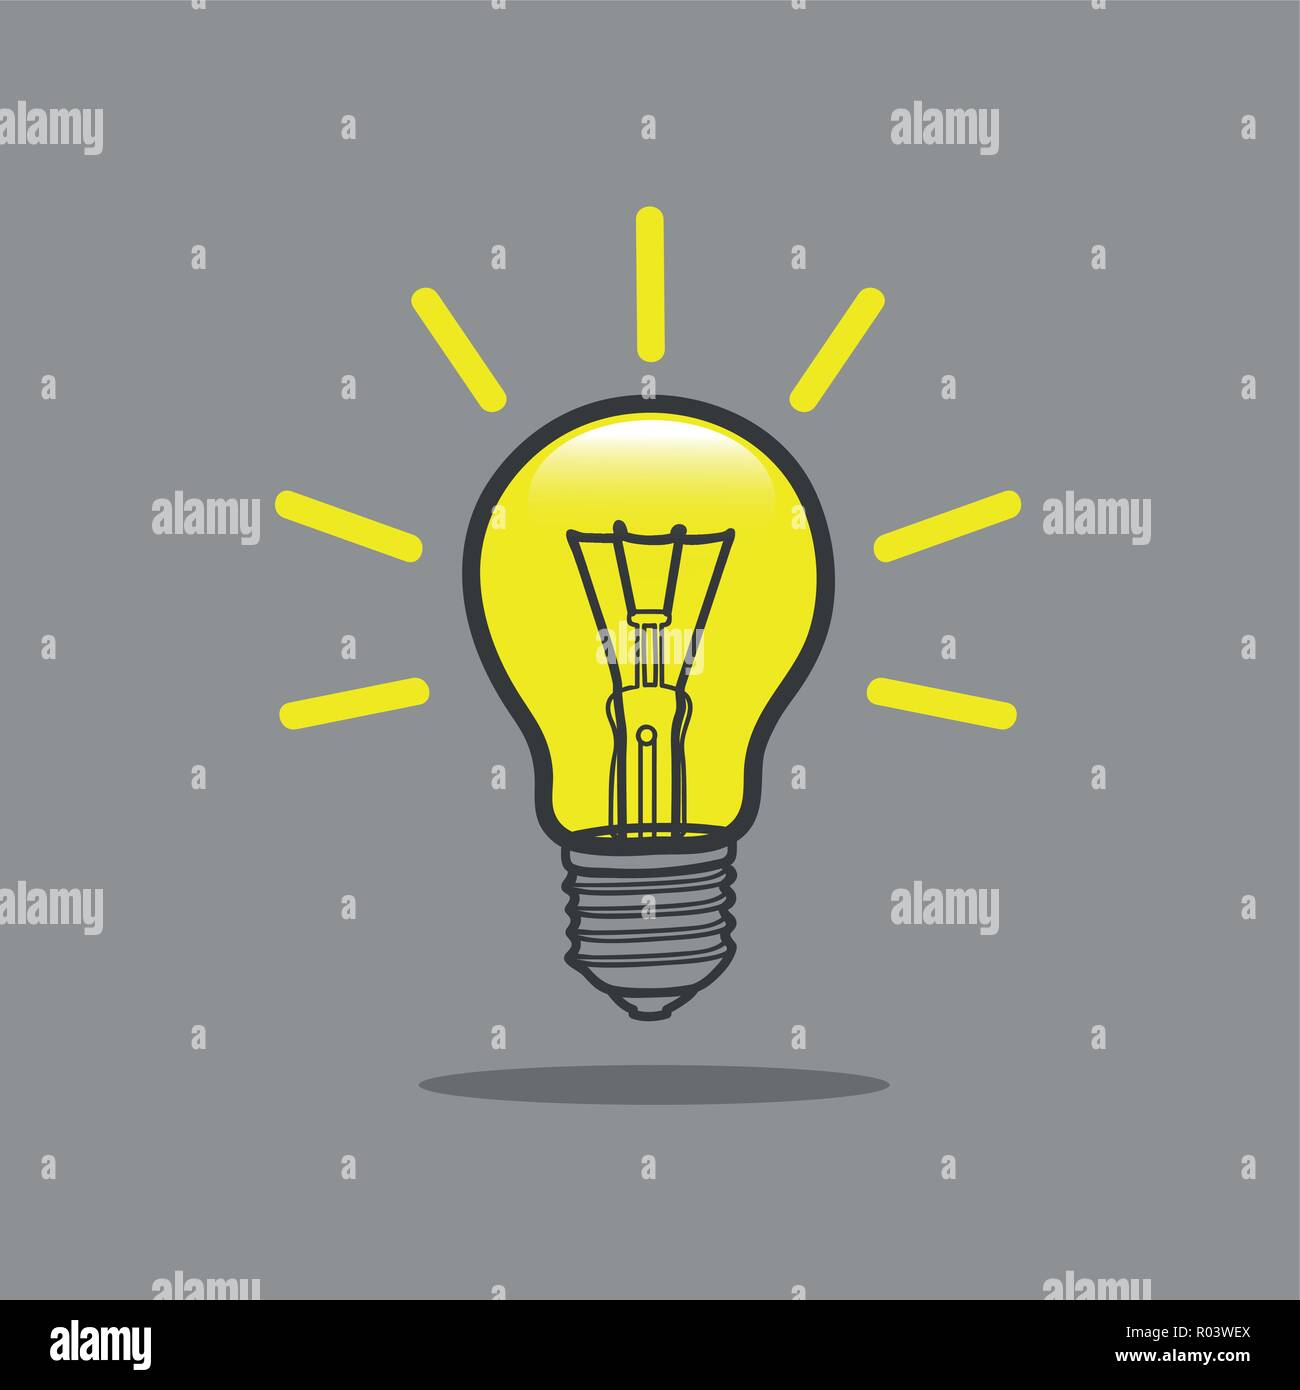 Lampe mit Strahlen/ Energie und Idee symbol Vektor illustration  Stock-Vektorgrafik - Alamy